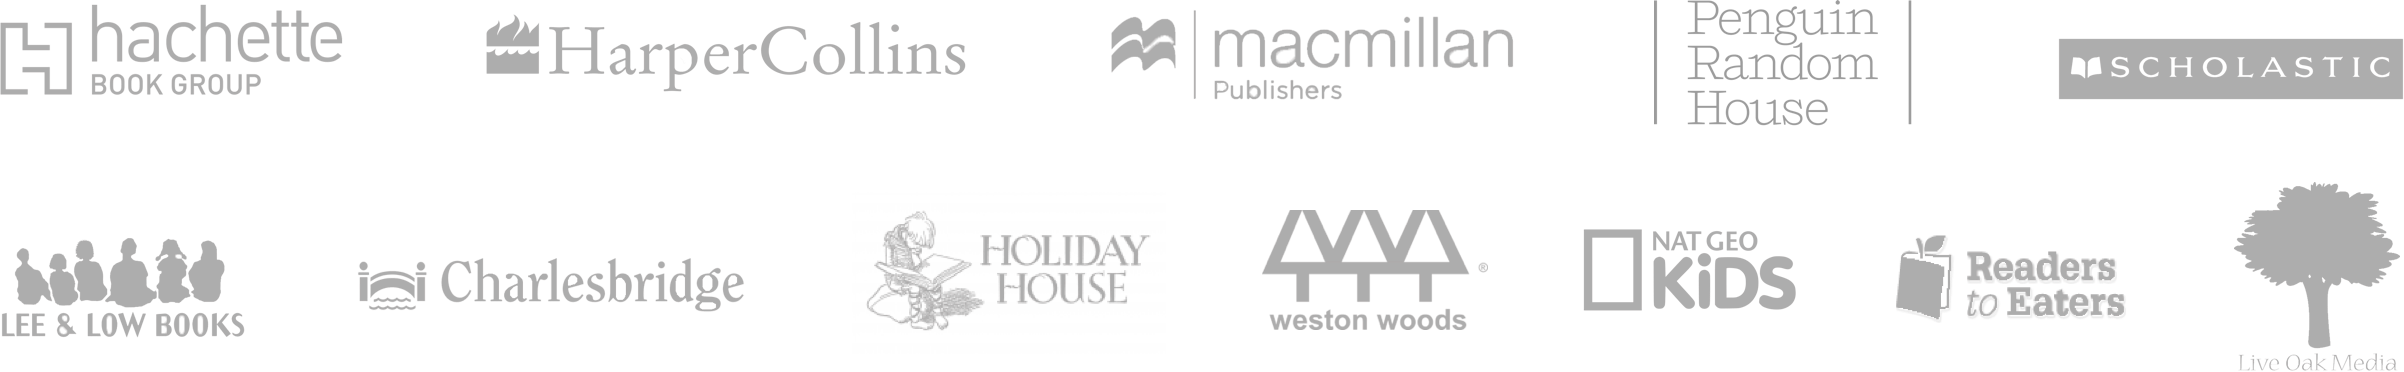 Hachette, HarperCollins, macmillan, Penguin Random House, Scholastic, Lee & Low Books, Charlesbridge, Holiday House, Weston Woods, Nat Geo Kids, Readers to Eaters, and Live Oak Media